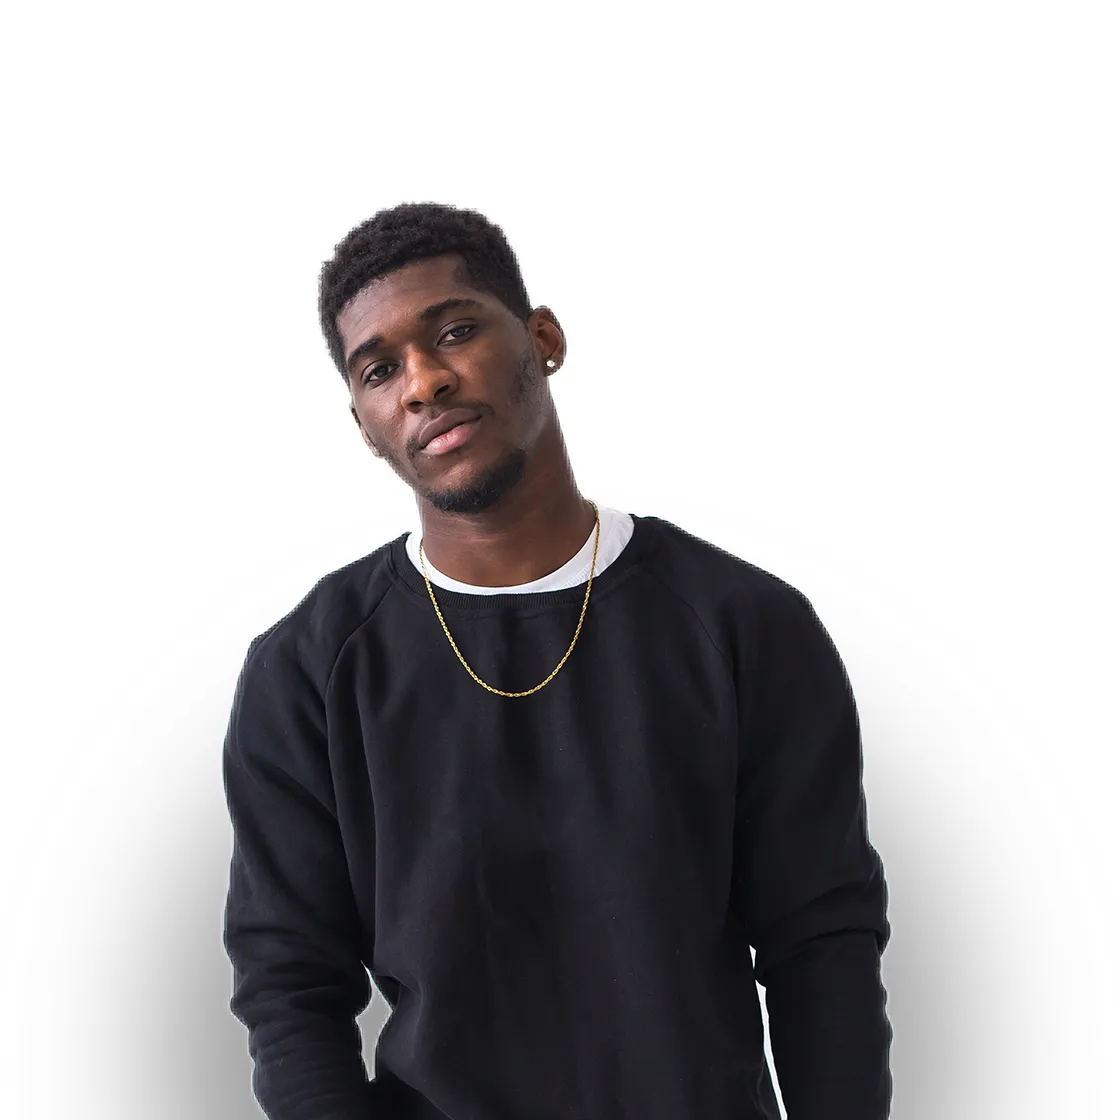 Black male model in black sweatshirt posing against white background.